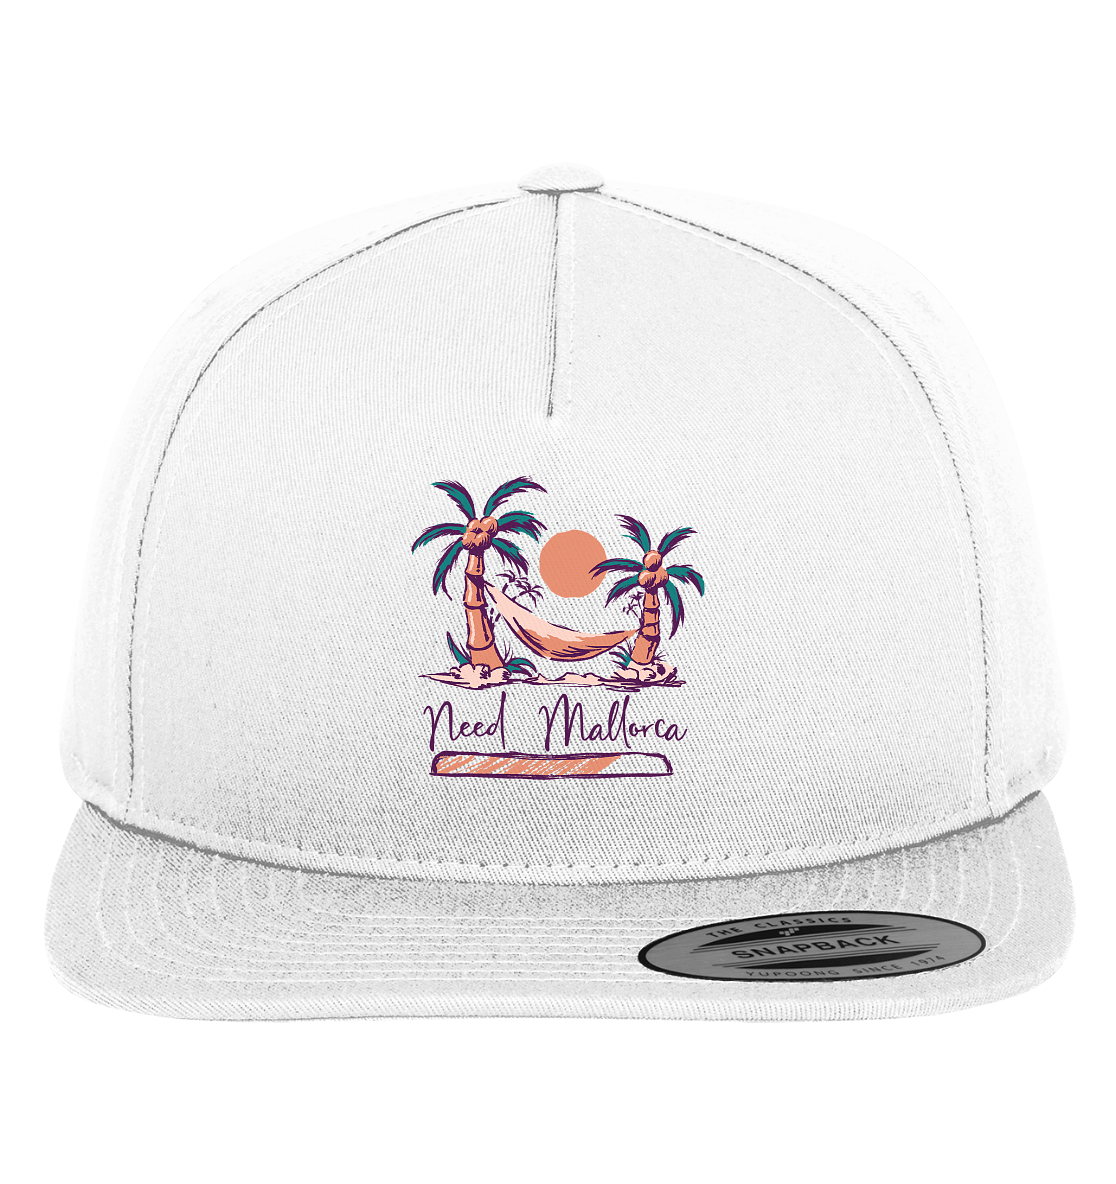 Need Mallorca • Premium Snapback Cap